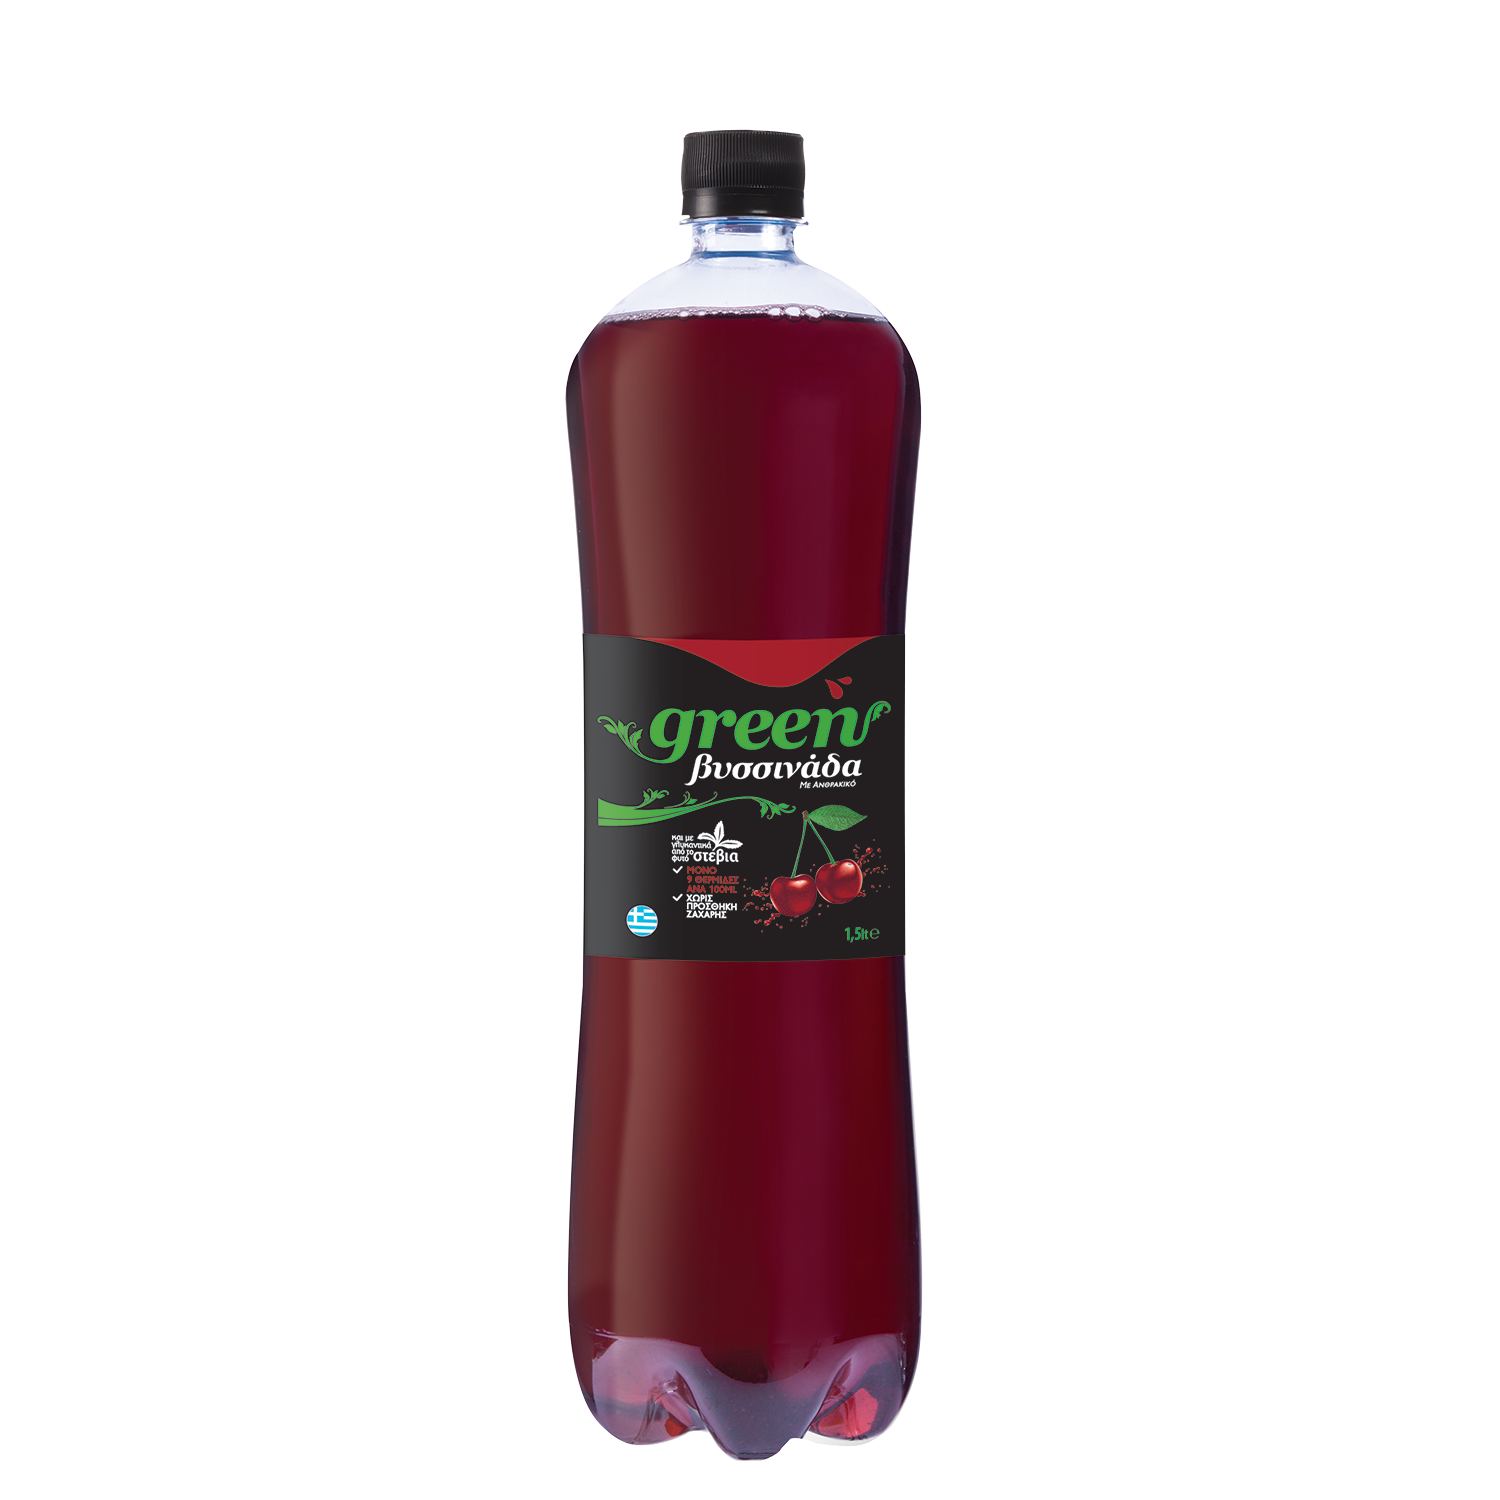 Green Cherry - PET - 1.5ml Bottle